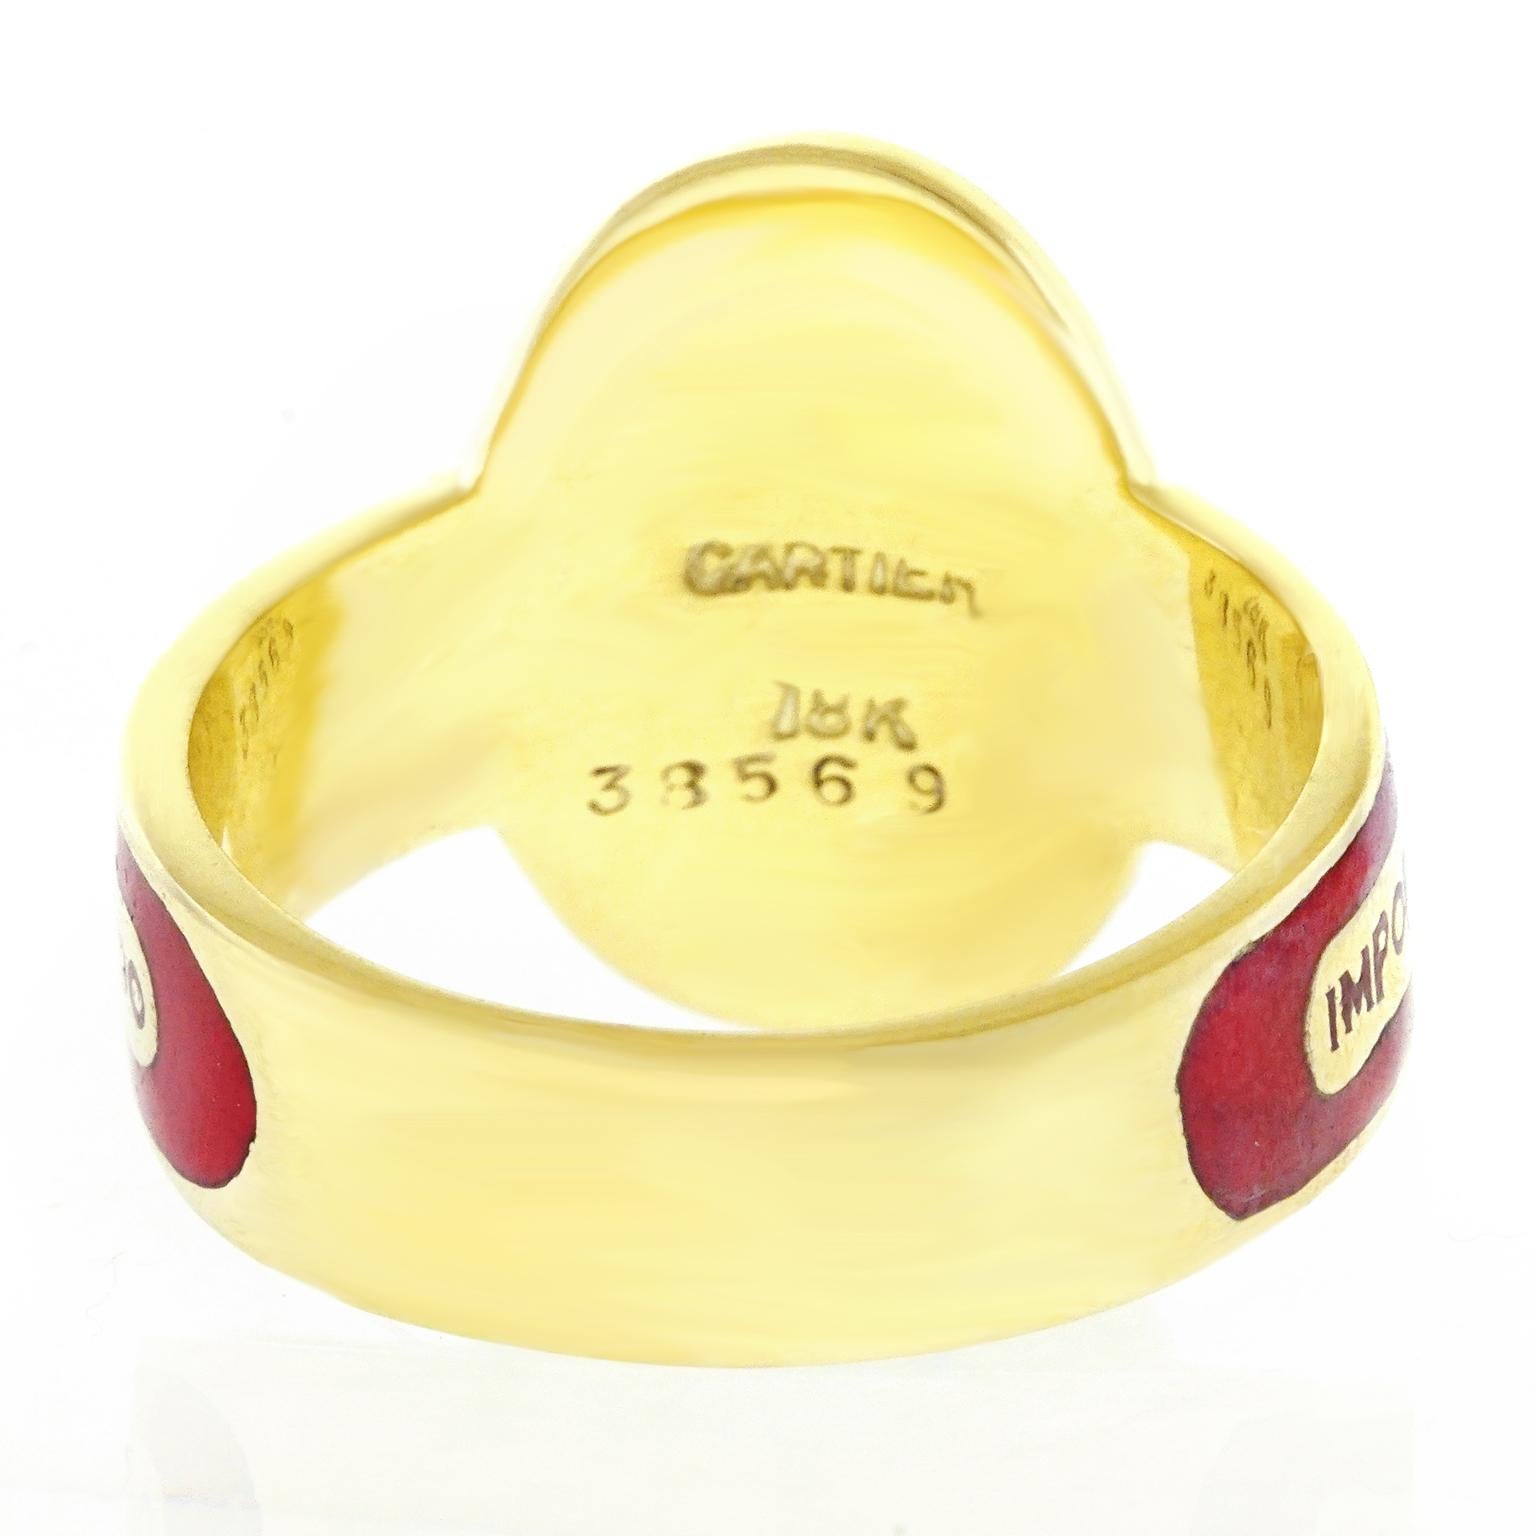 Cartier Enamel on Gold Cigar Band Ring 2